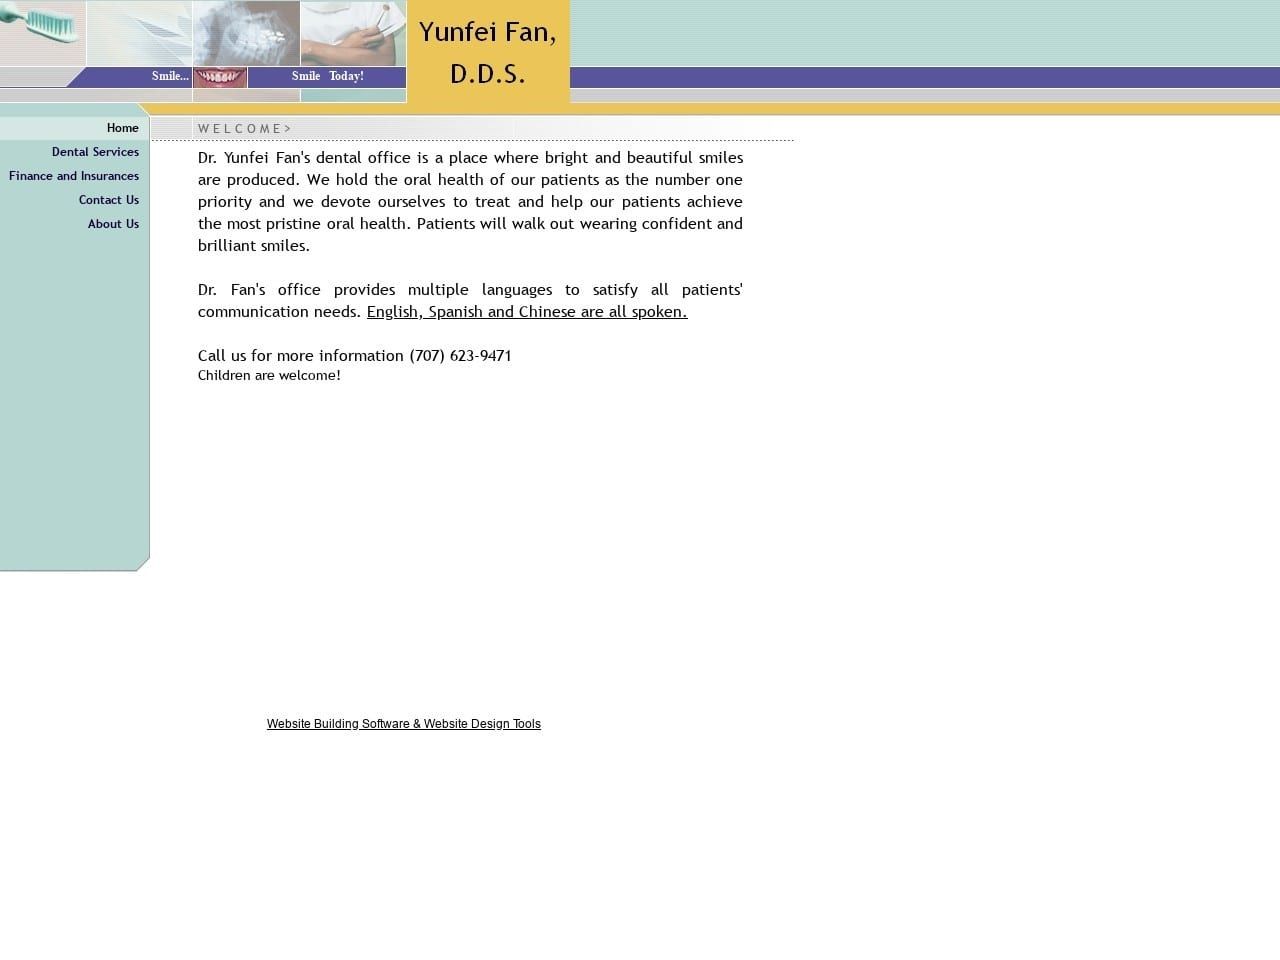 Dr. Yunfei Fan DDS Website Screenshot from fanfamilydentistry.com